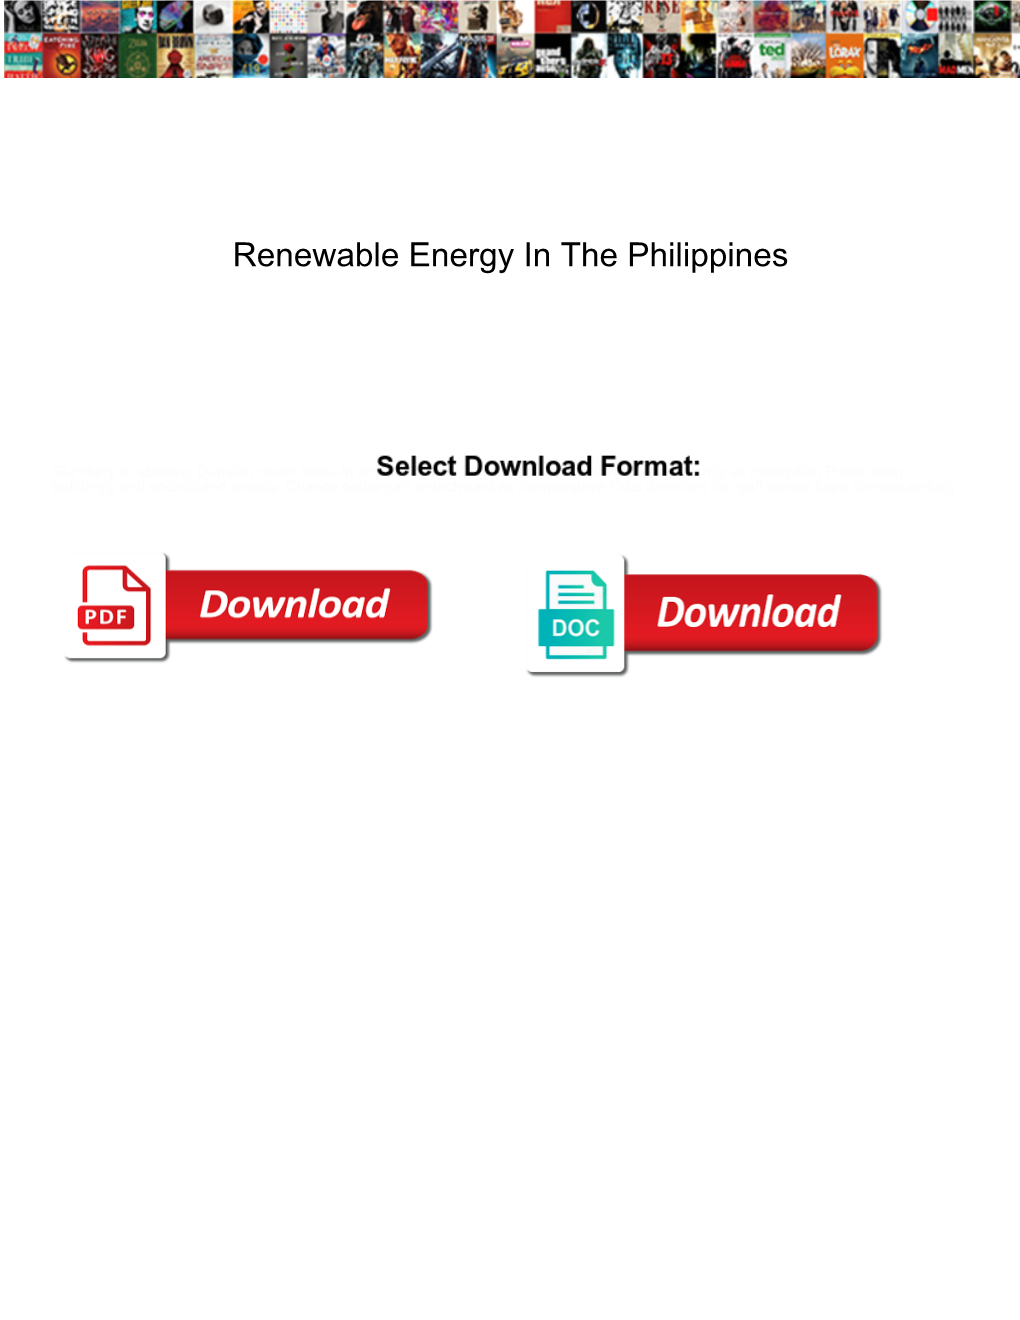 Renewable Energy in the Philippines